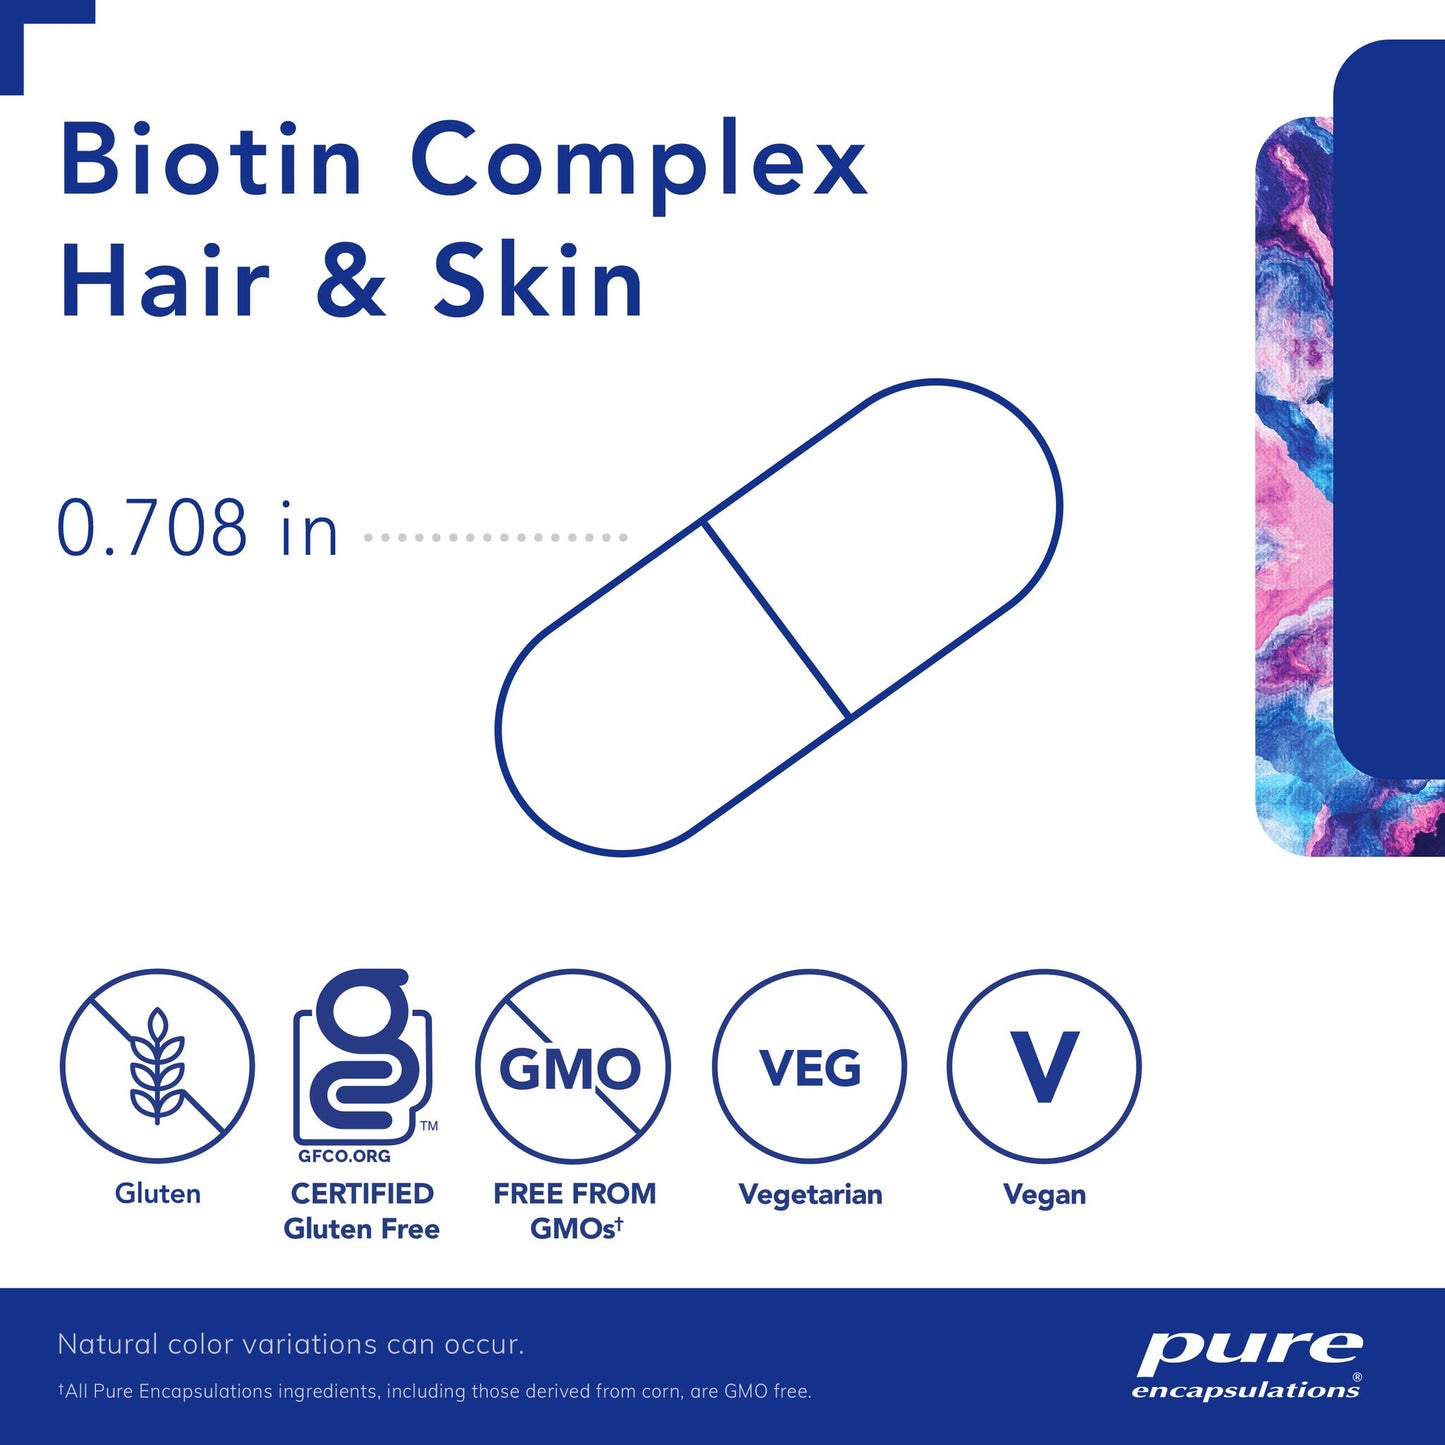 Biotin Complex Hair & Skin